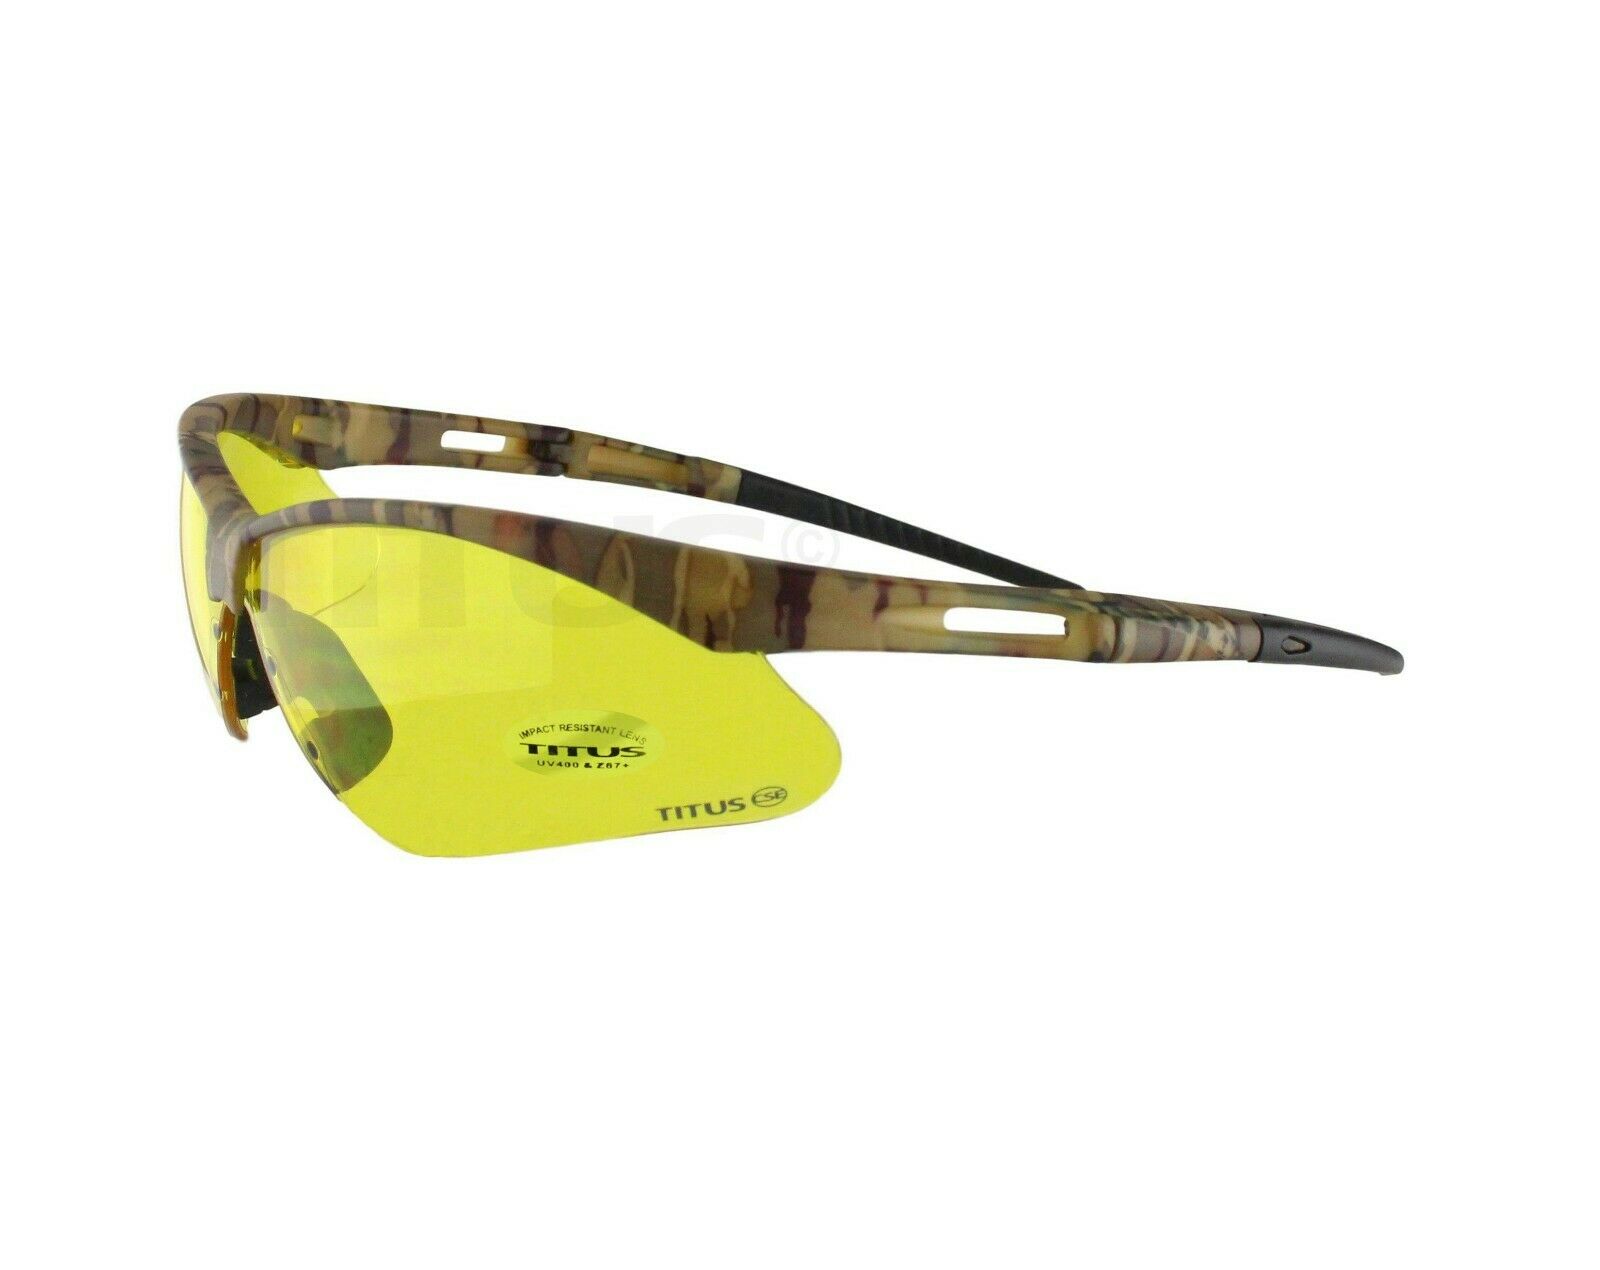 Titus G40 Aero Safety Glasses Shooting Motorcycle Eye Protection Ansi Z87+ Camo